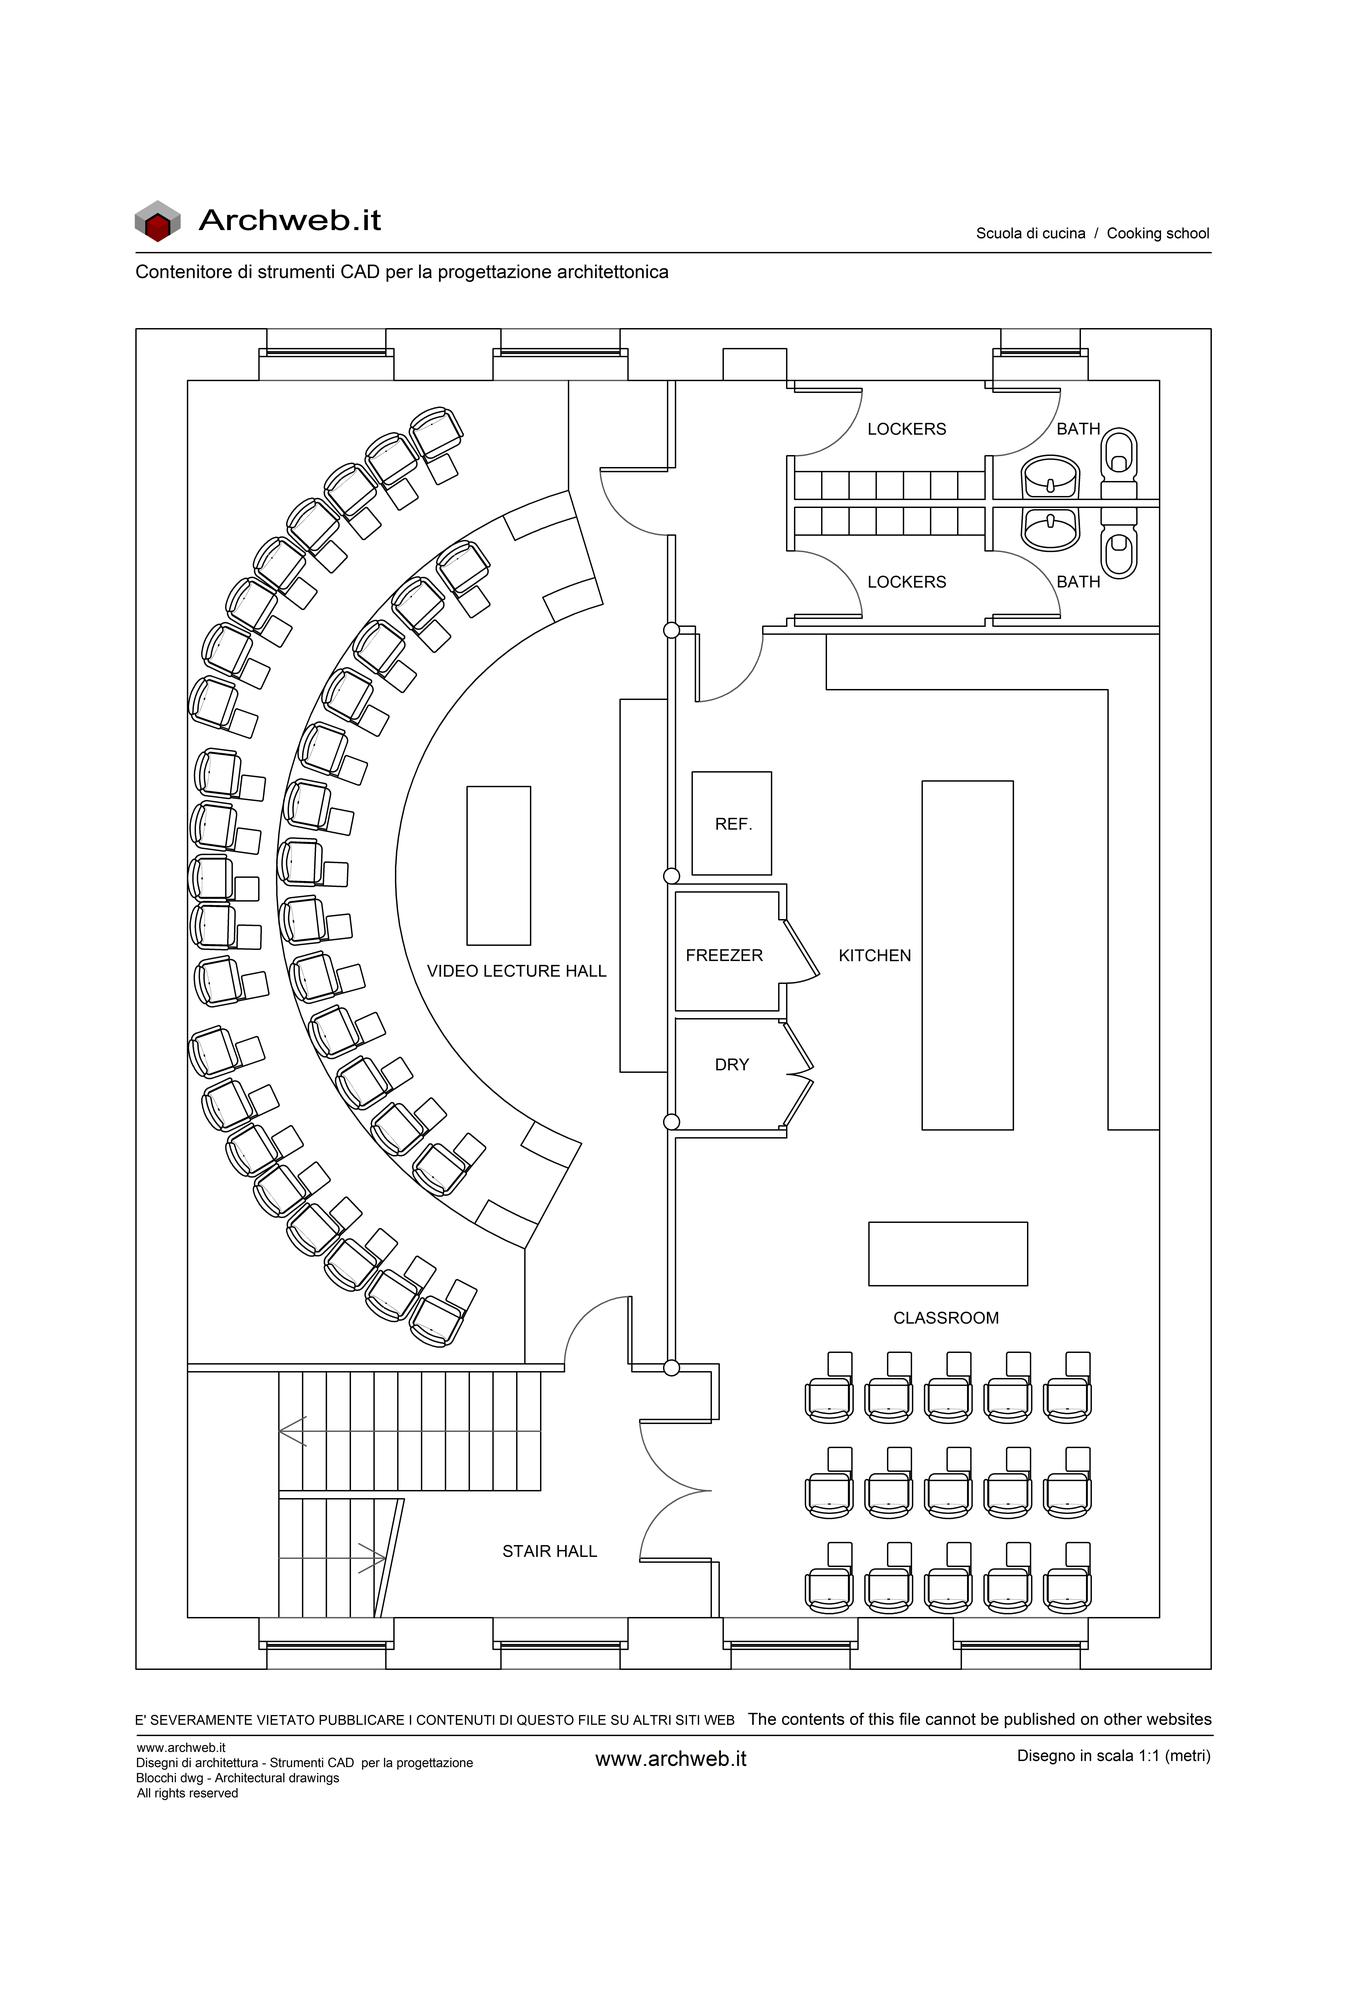 School kitchen plan 01- 1:100 scale dwg drawing - Archweb